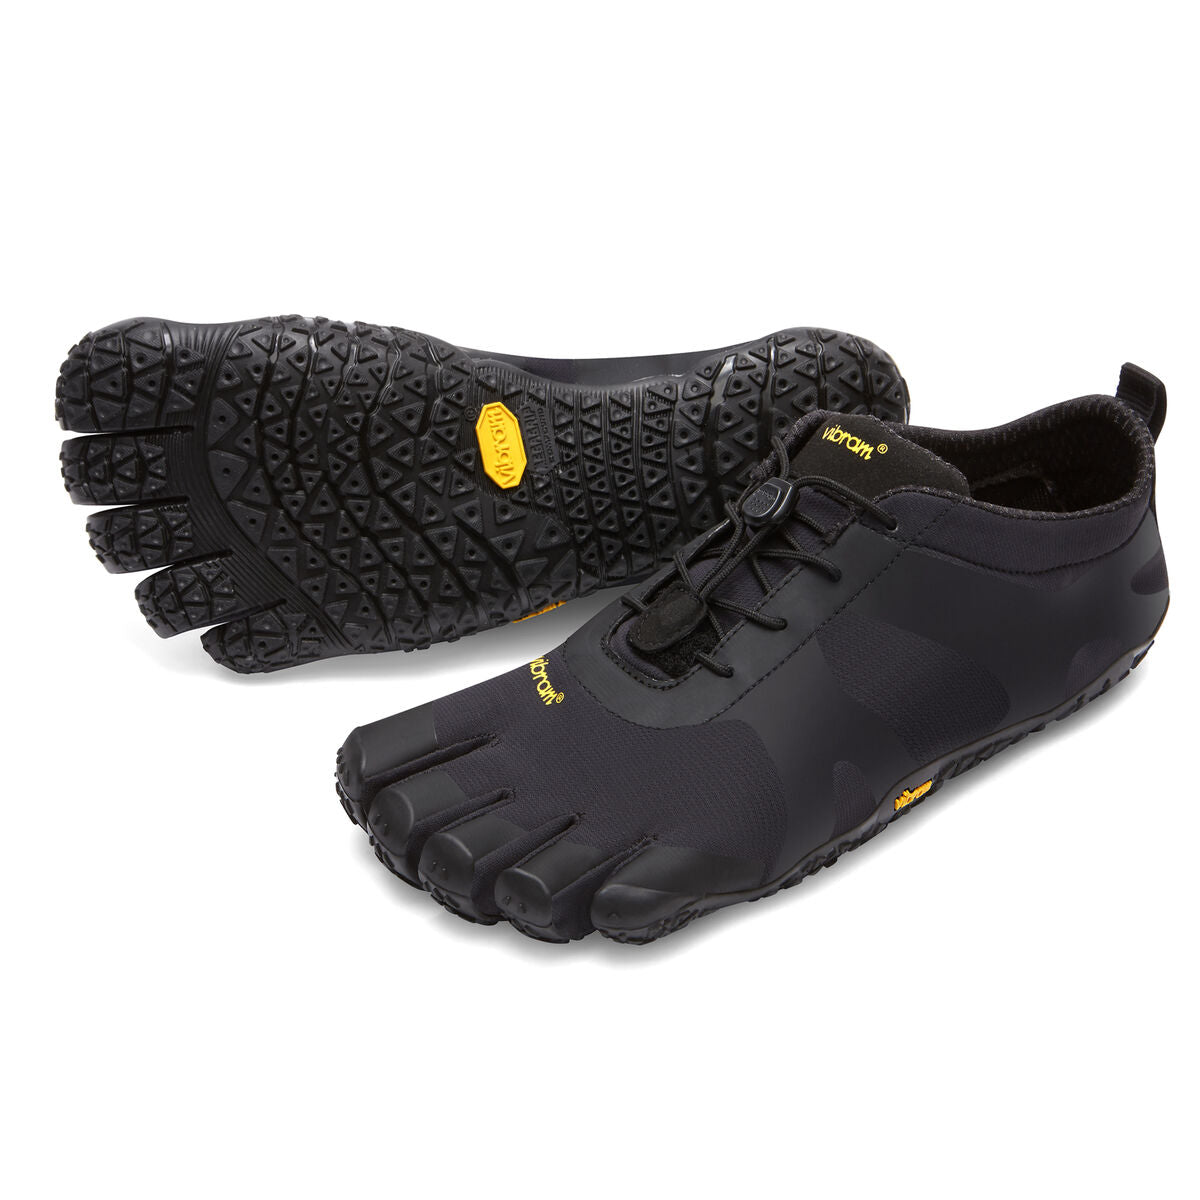 Men's Vibram Five Fingers V-Alpha Hiking Shoe in Black from the front